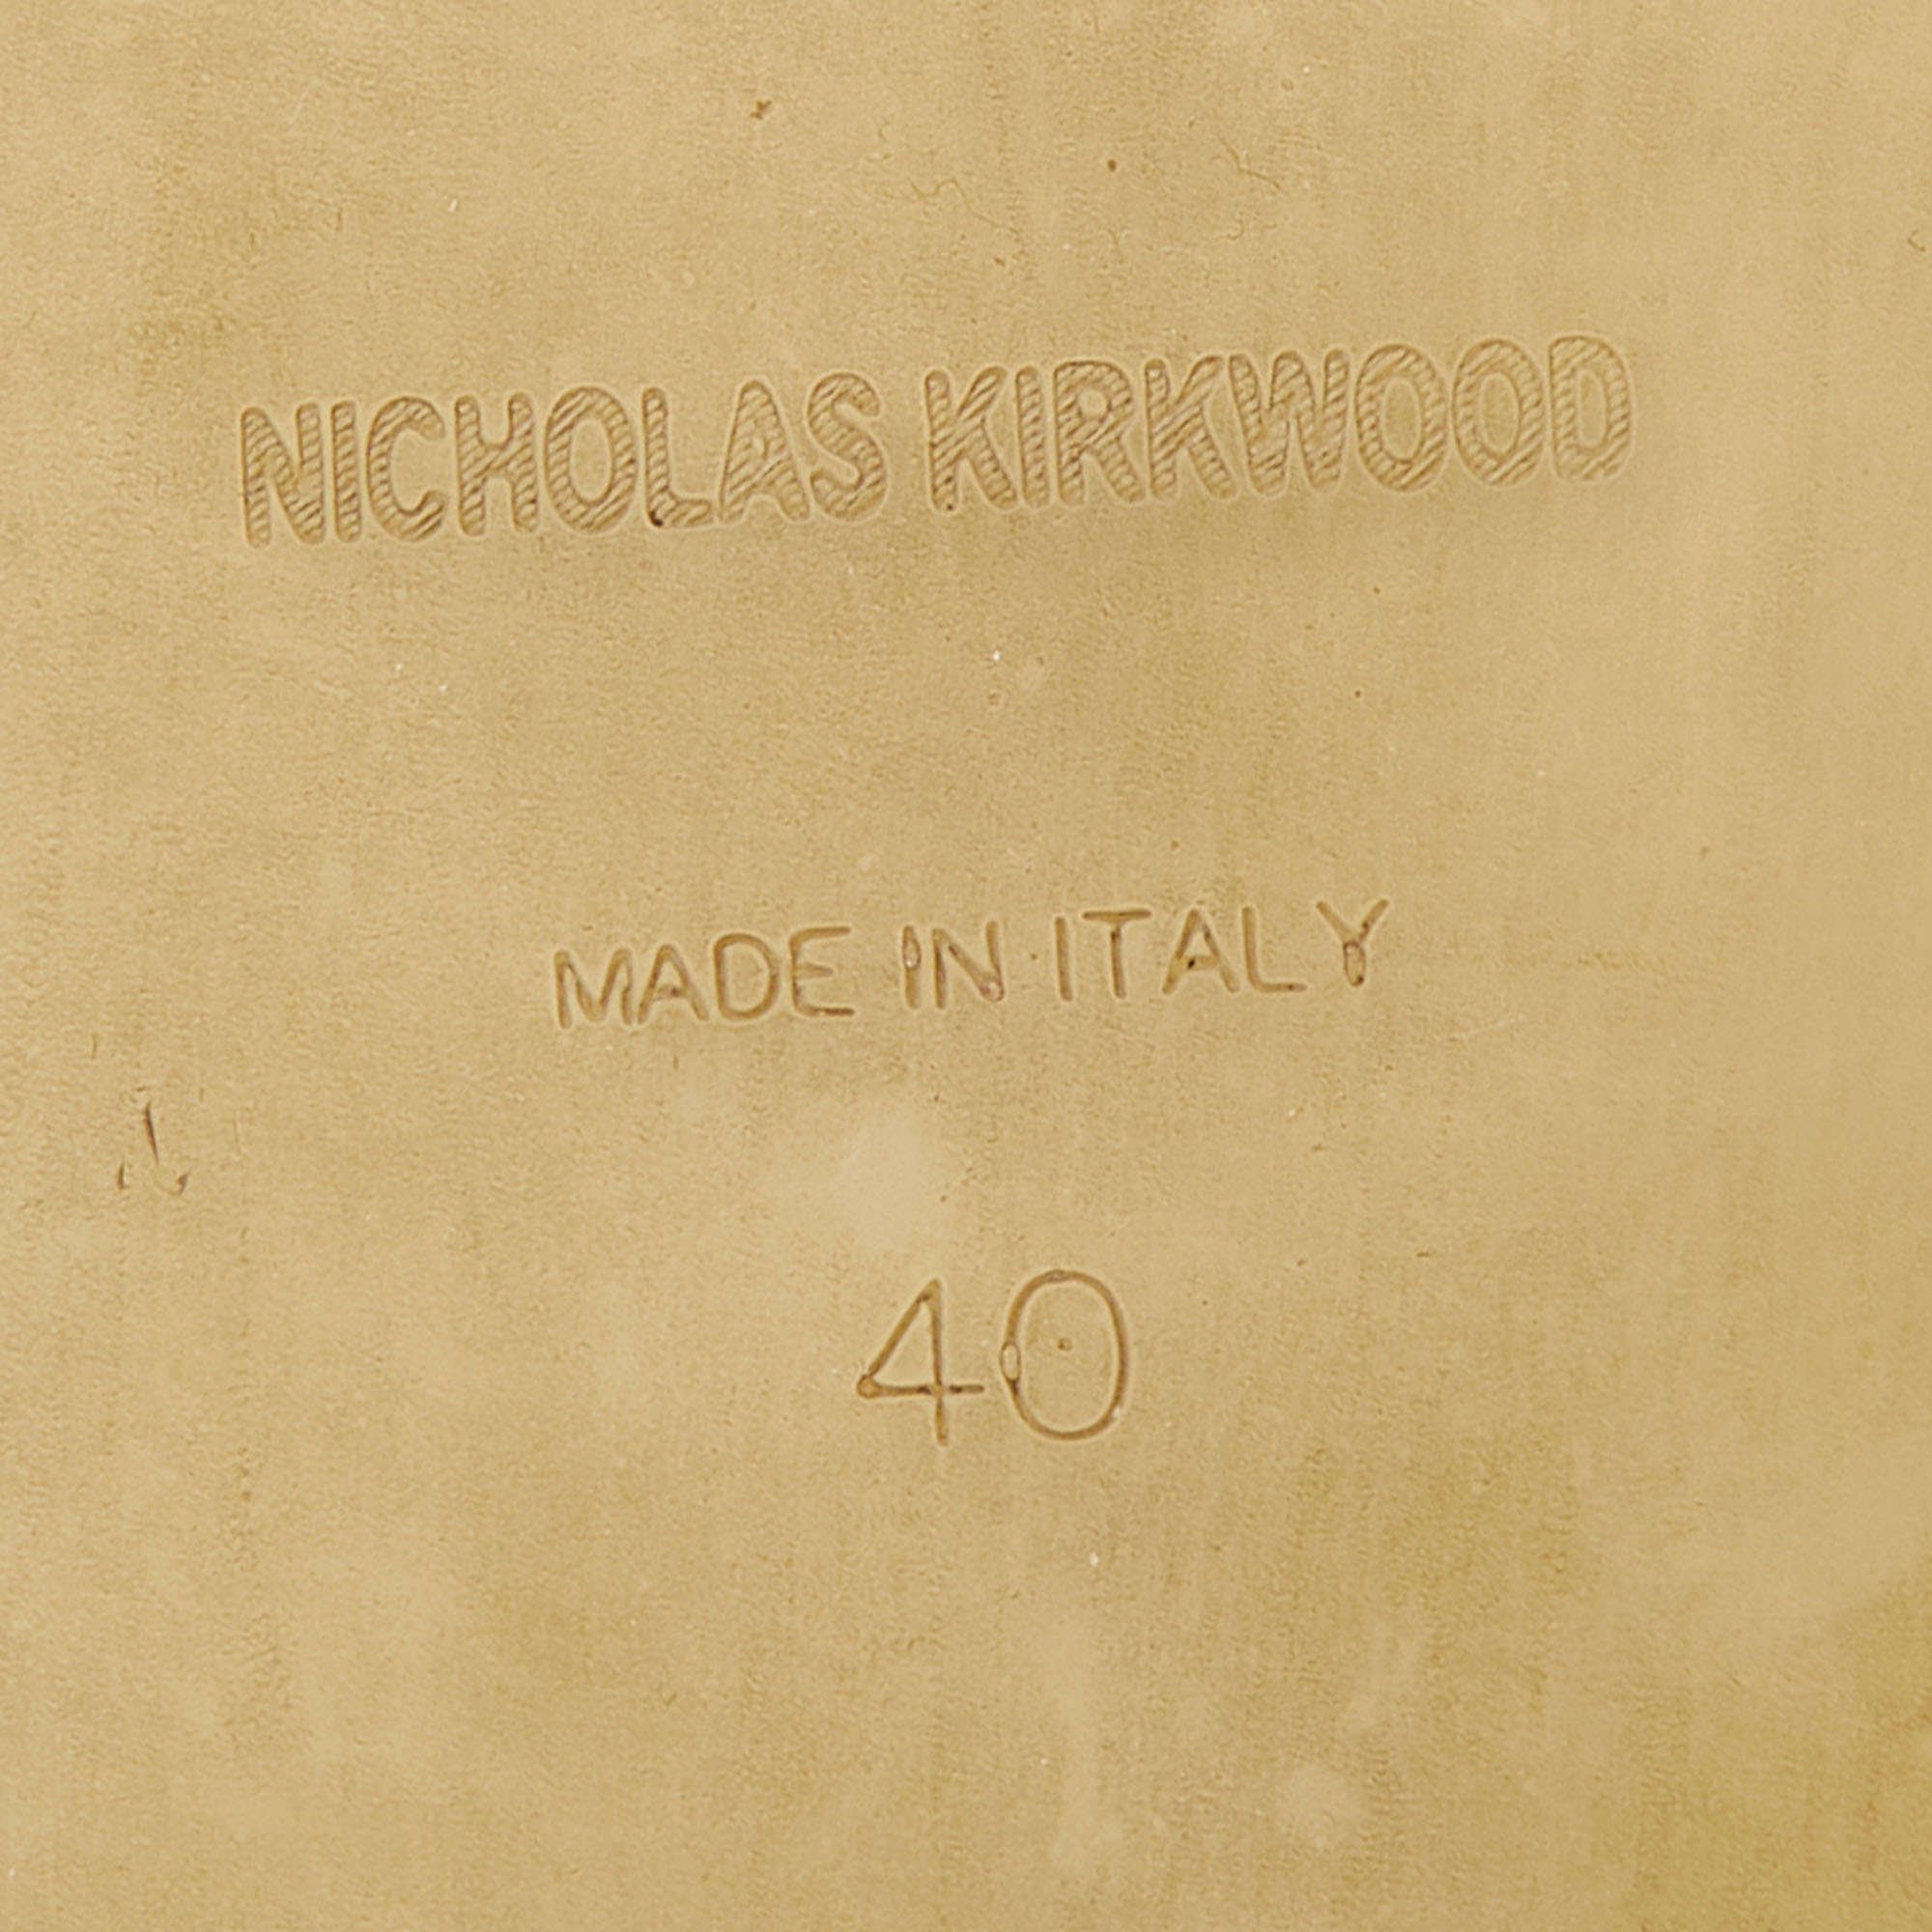 Nicholas Kirkwood Black Lace Alona Pointed Toe Loafers Size 40